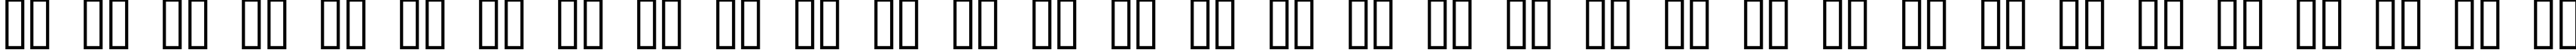 Пример написания русского алфавита шрифтом Latha